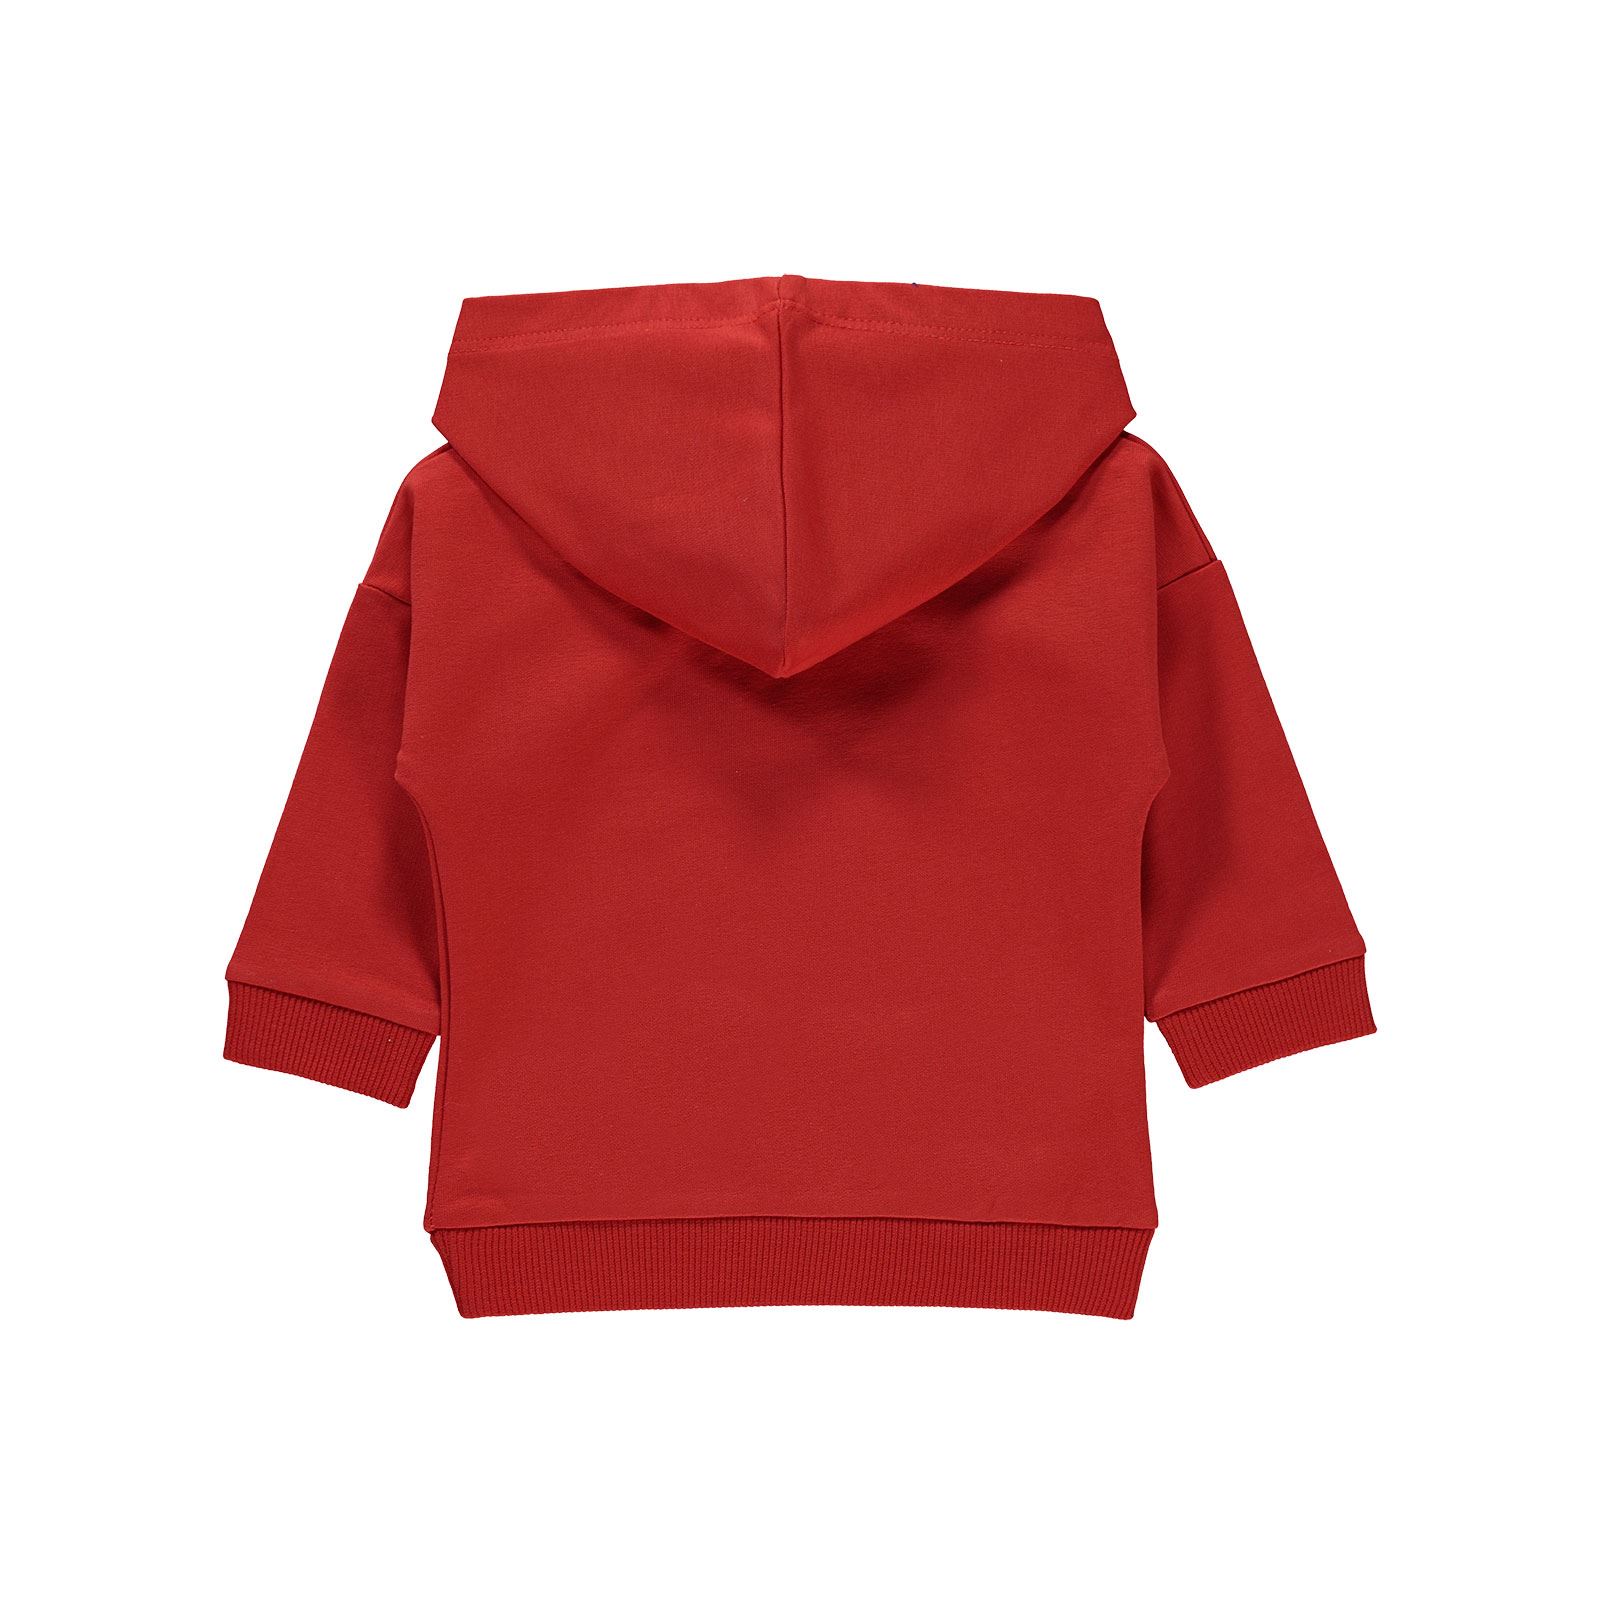 Civil Baby Erkek Bebek Kapüşonlu Sweatshirt 6-18 Ay Kırmızı